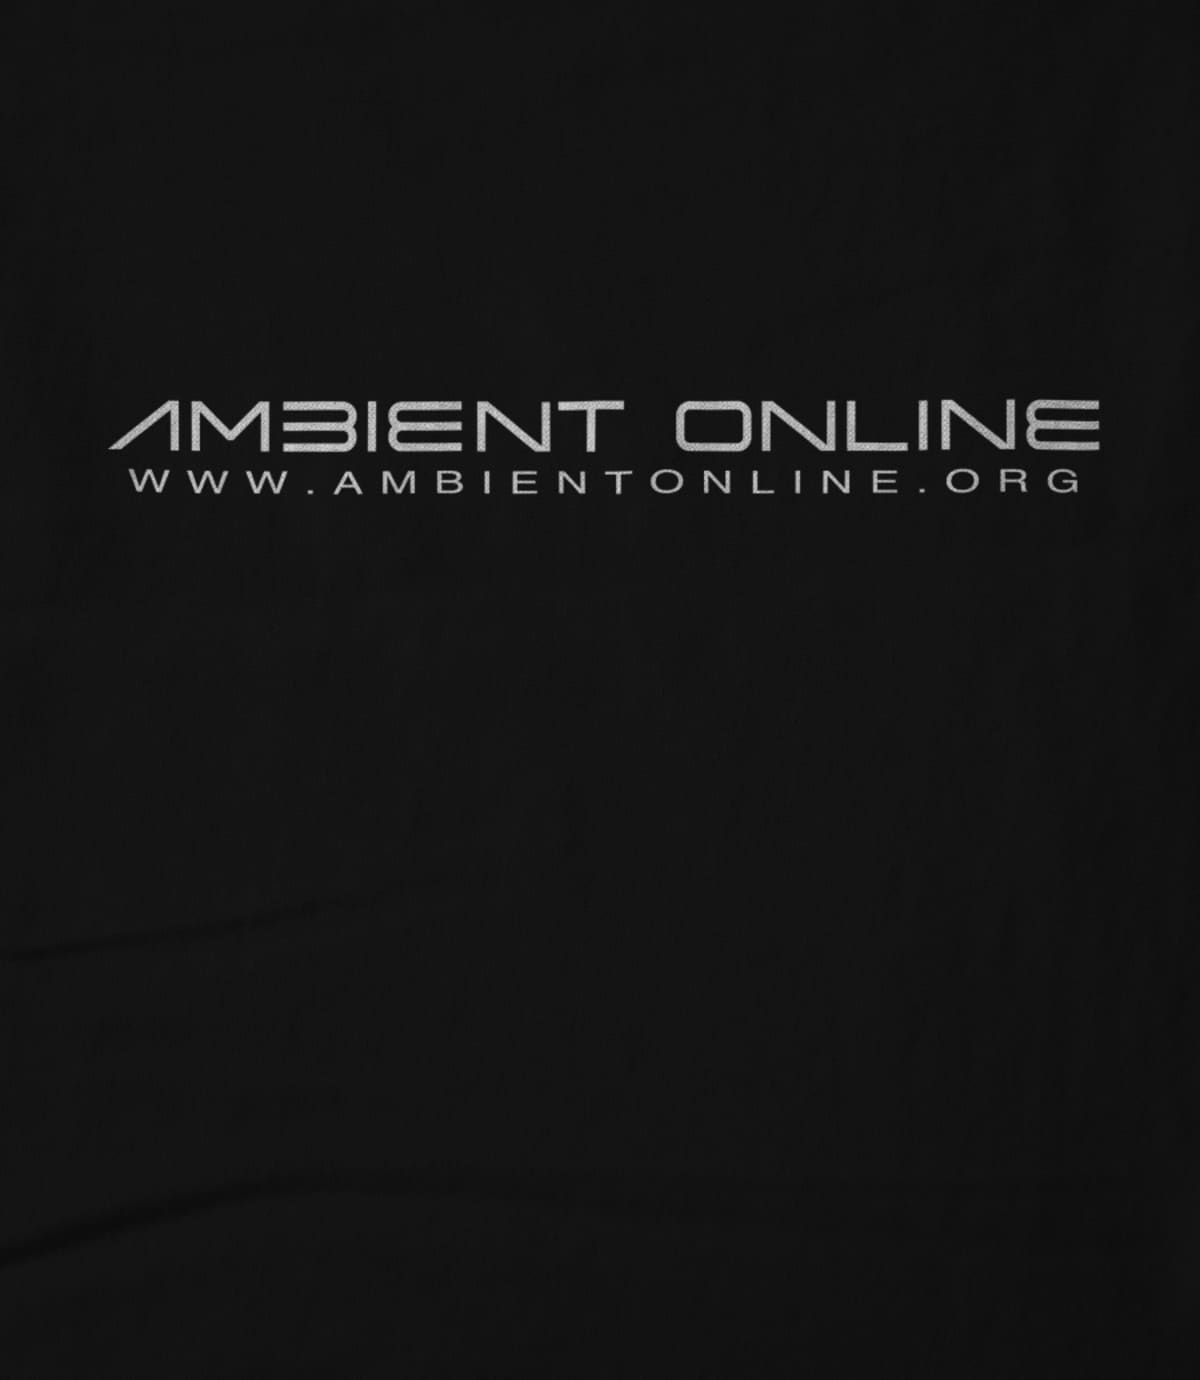 Ambient online official ambient online t shirt nftn50